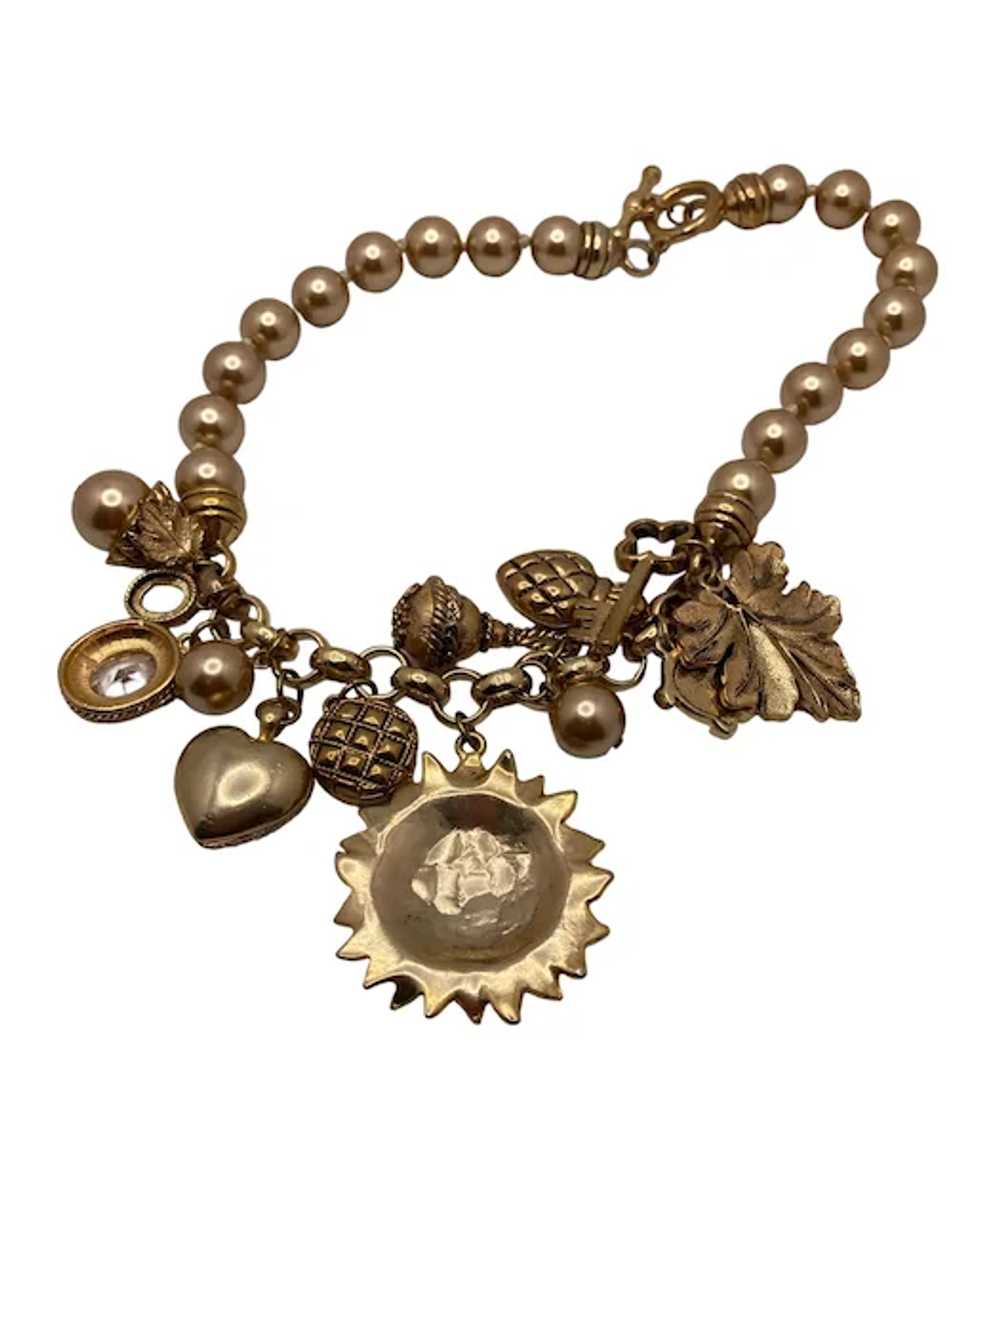 Gorgeous Gold Tone and Rhinestone Charm Necklace - image 5